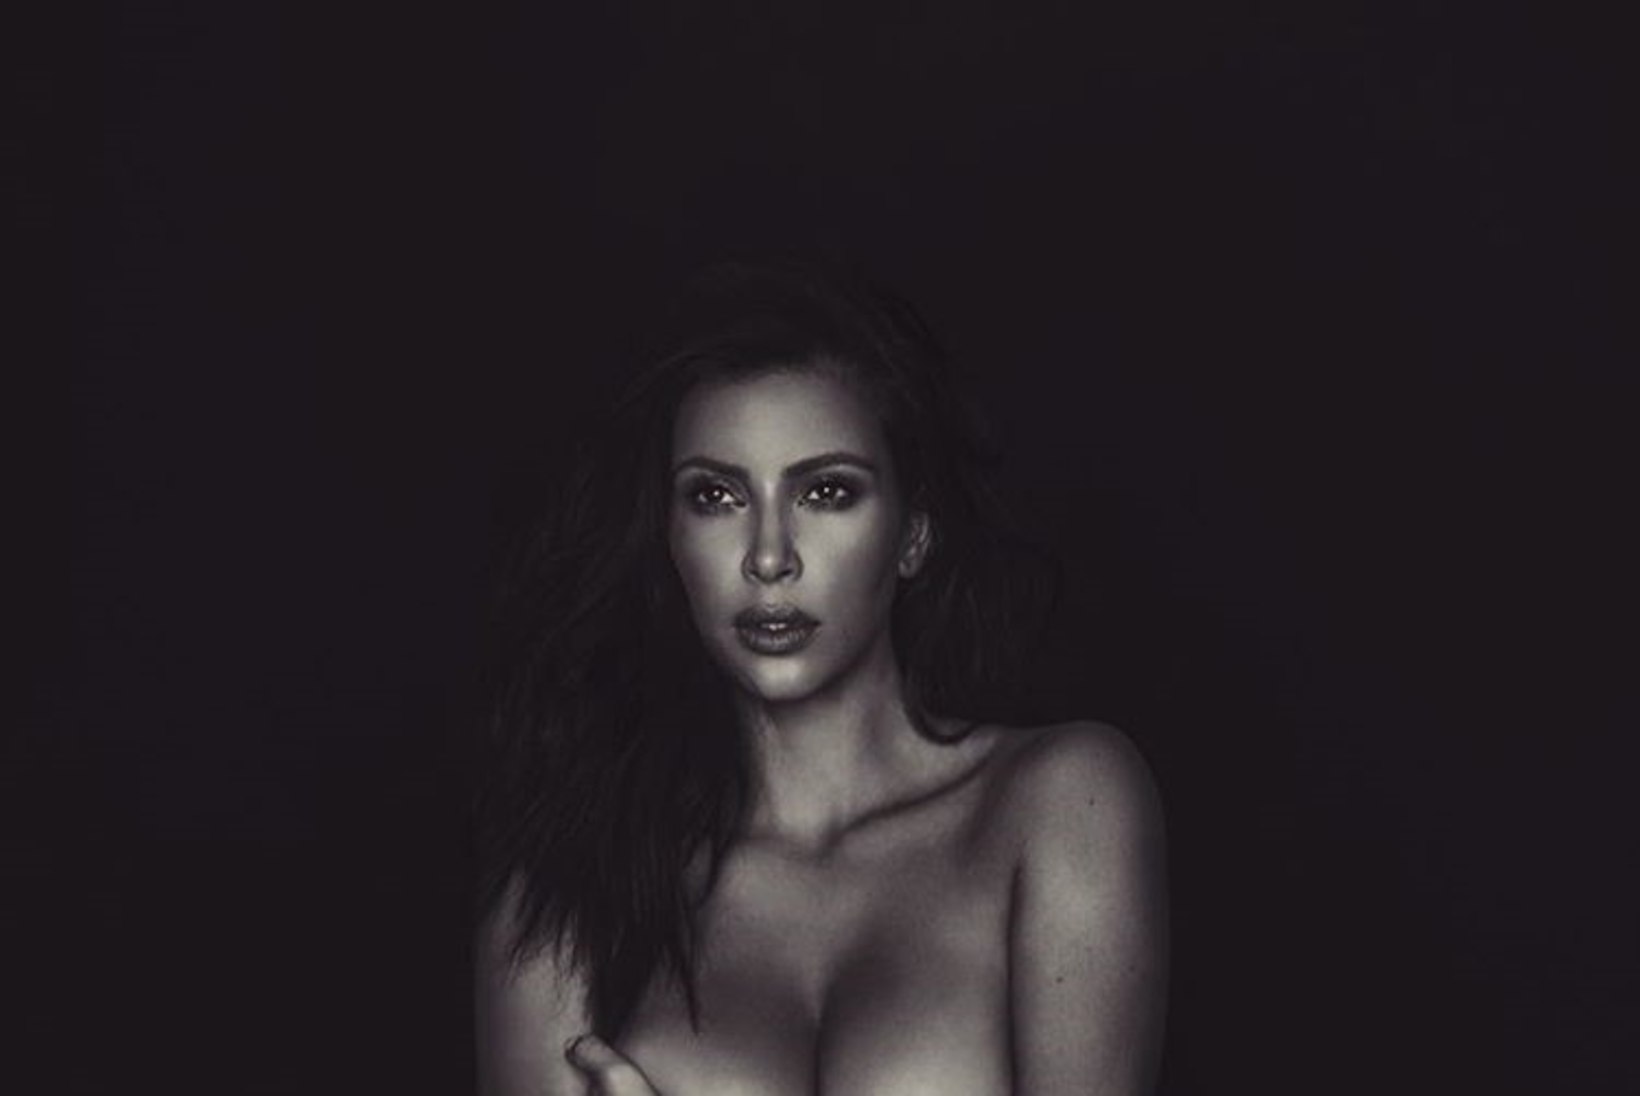 Kim Kardashian postitas Instagrami aktifoto: "Mul pole midagi selga panna."